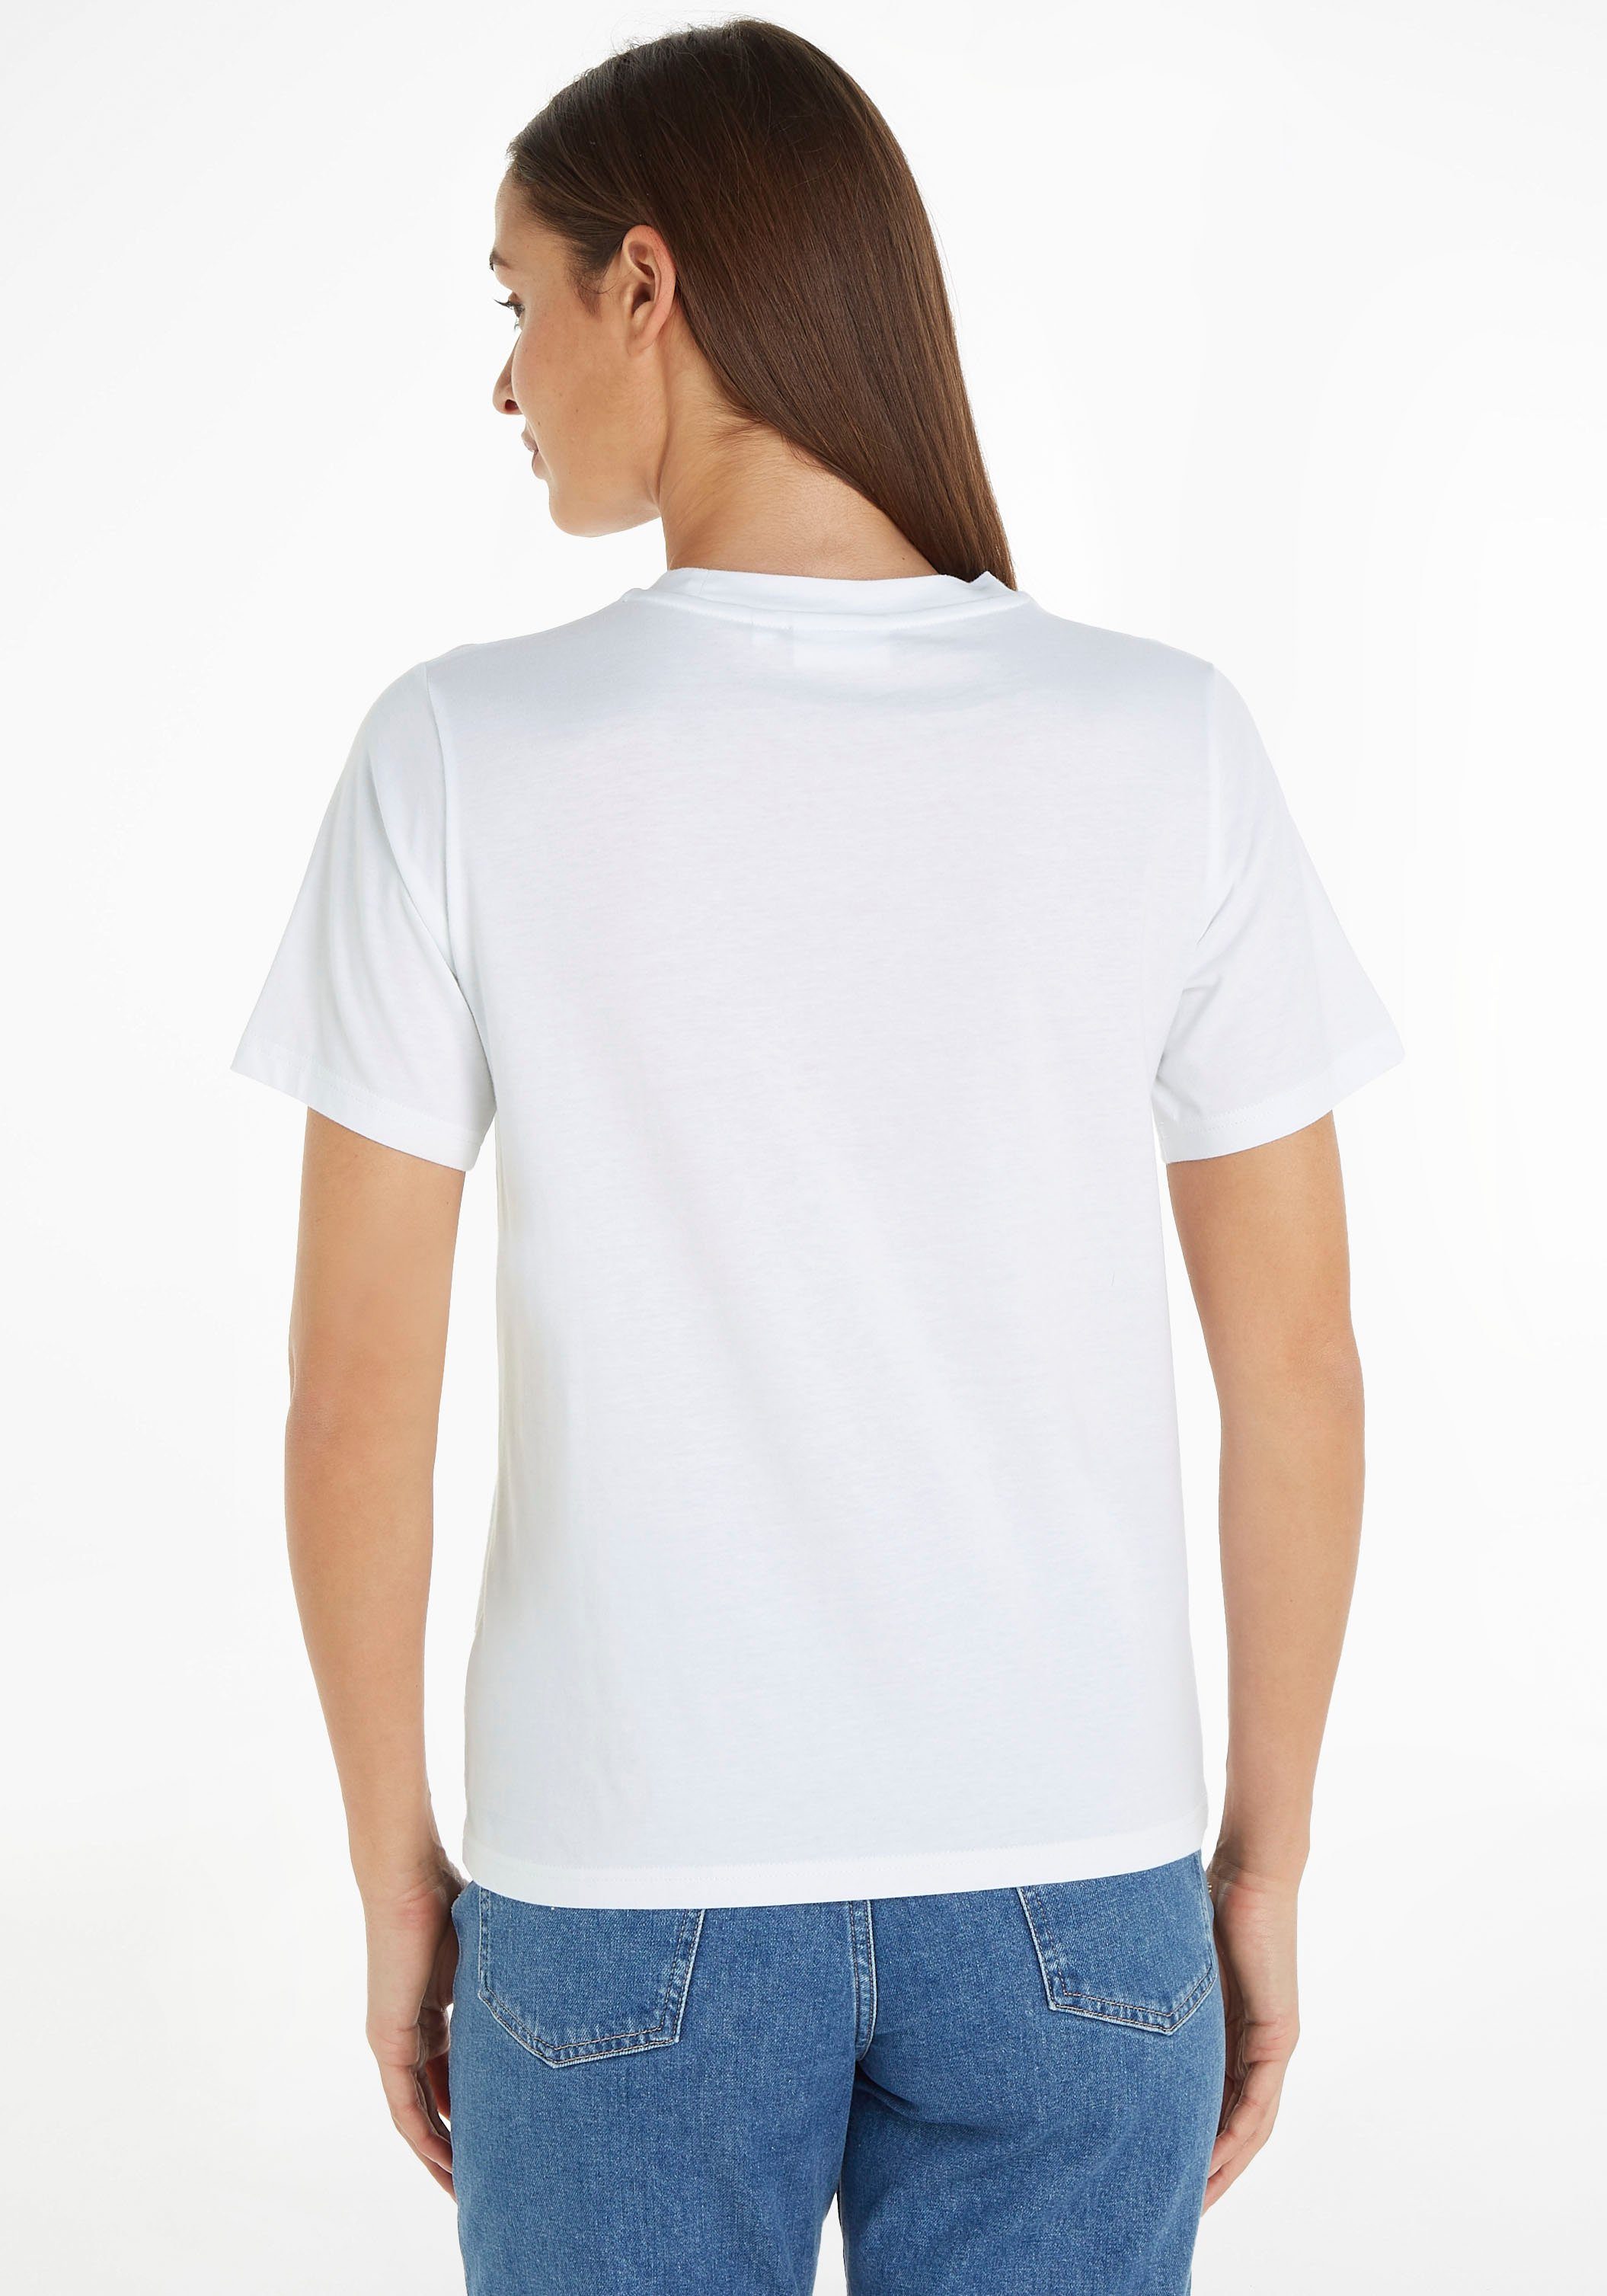 Calvin Klein mit T-Shirt Floral-Printmuster